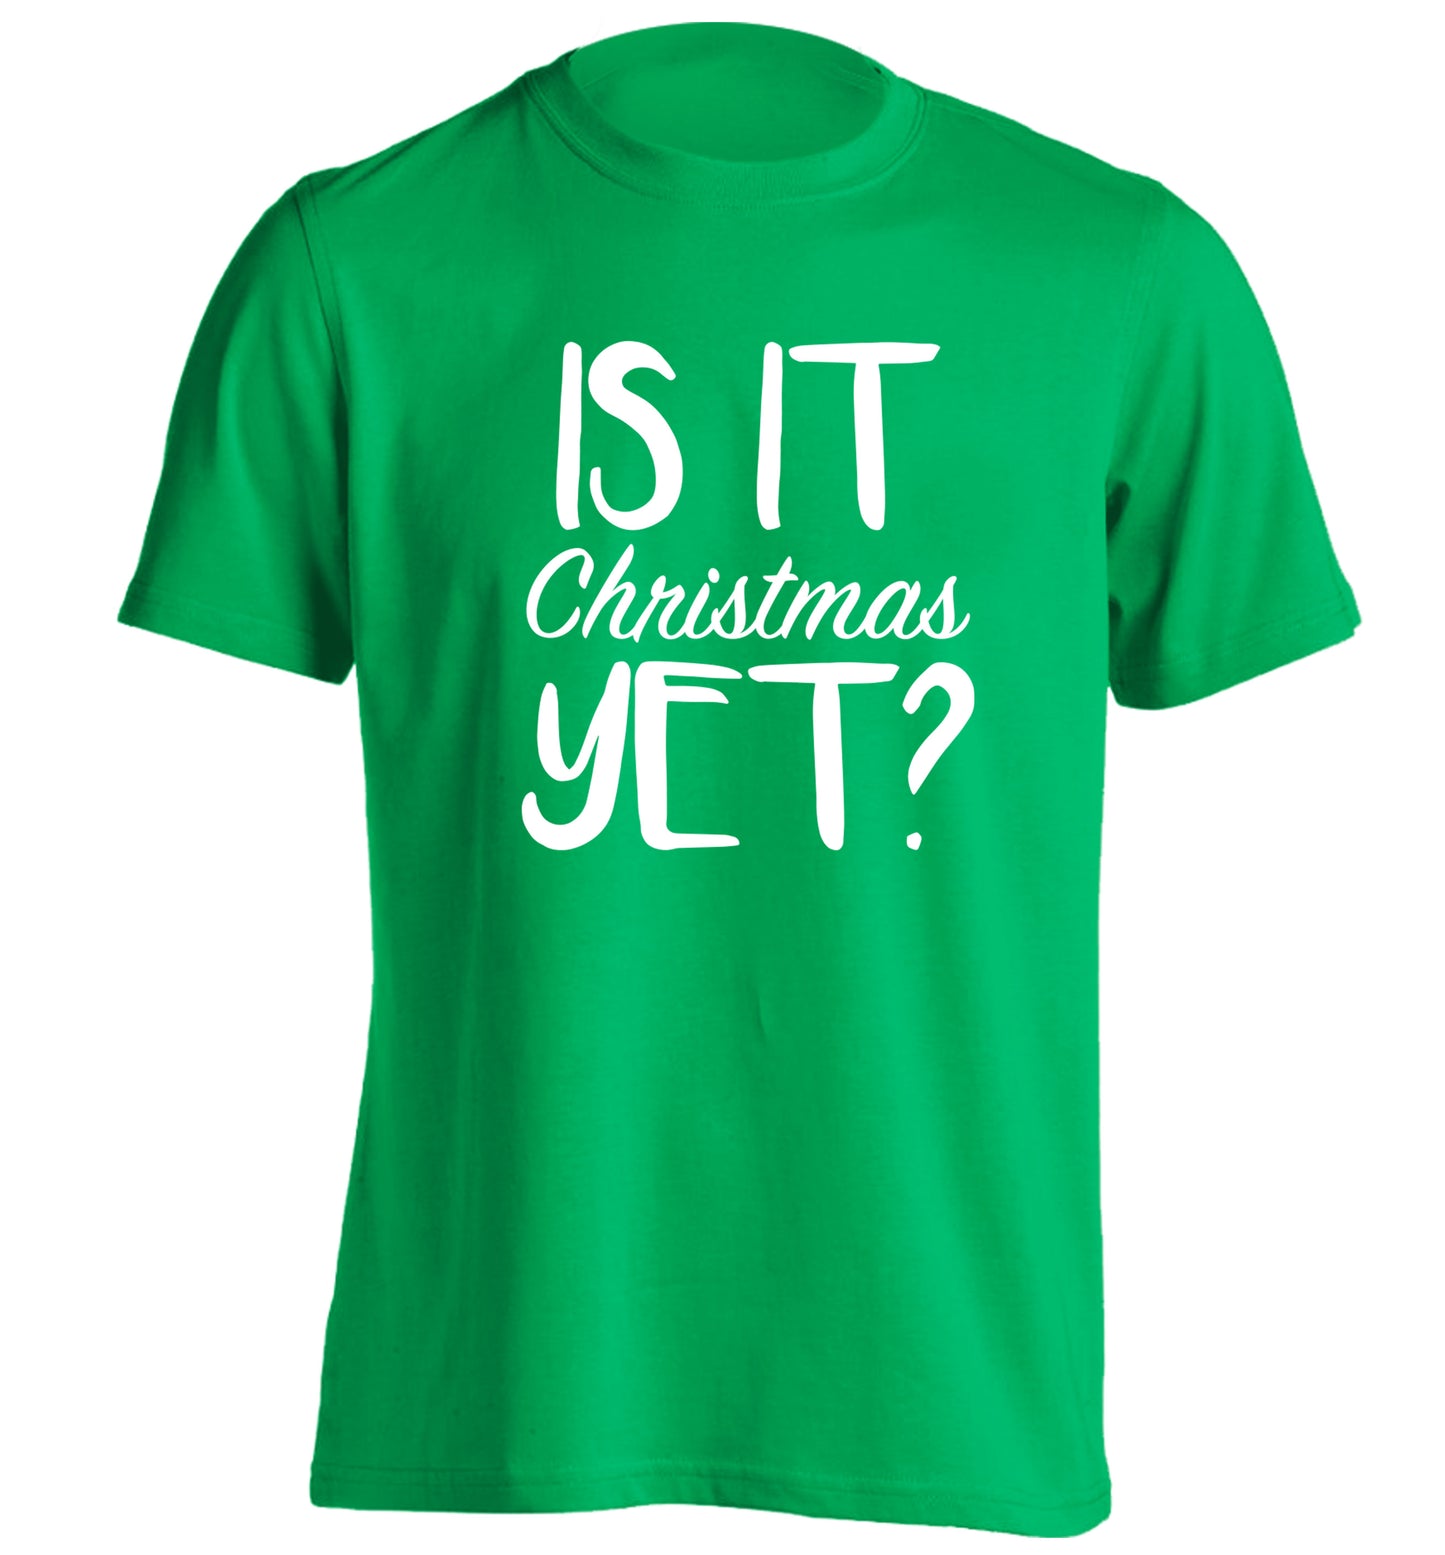 Is it Christmas yet? adults unisex green Tshirt 2XL